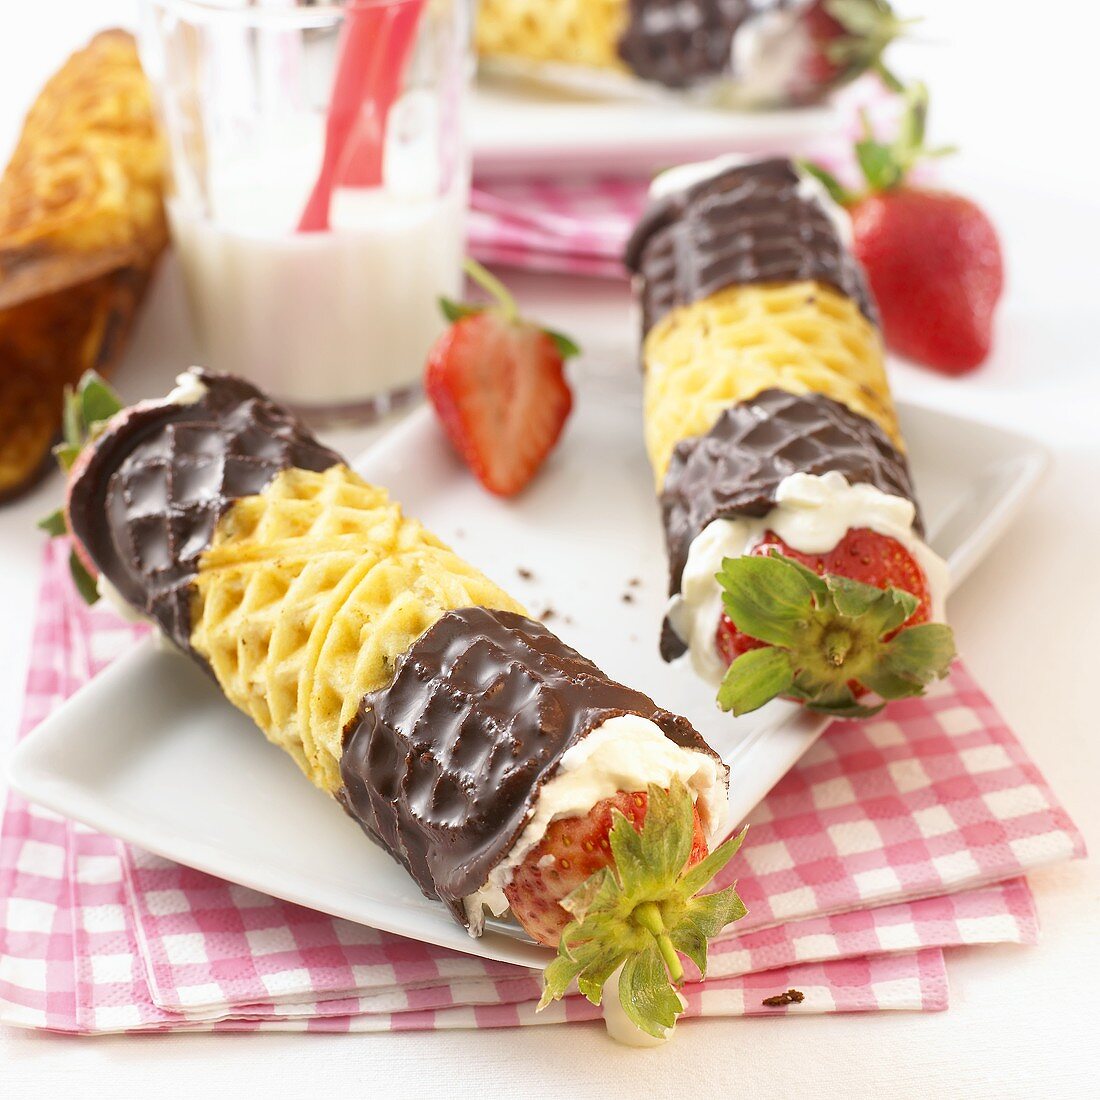 Schlotfeger (Wafer rolls filled with cream & strawberries)